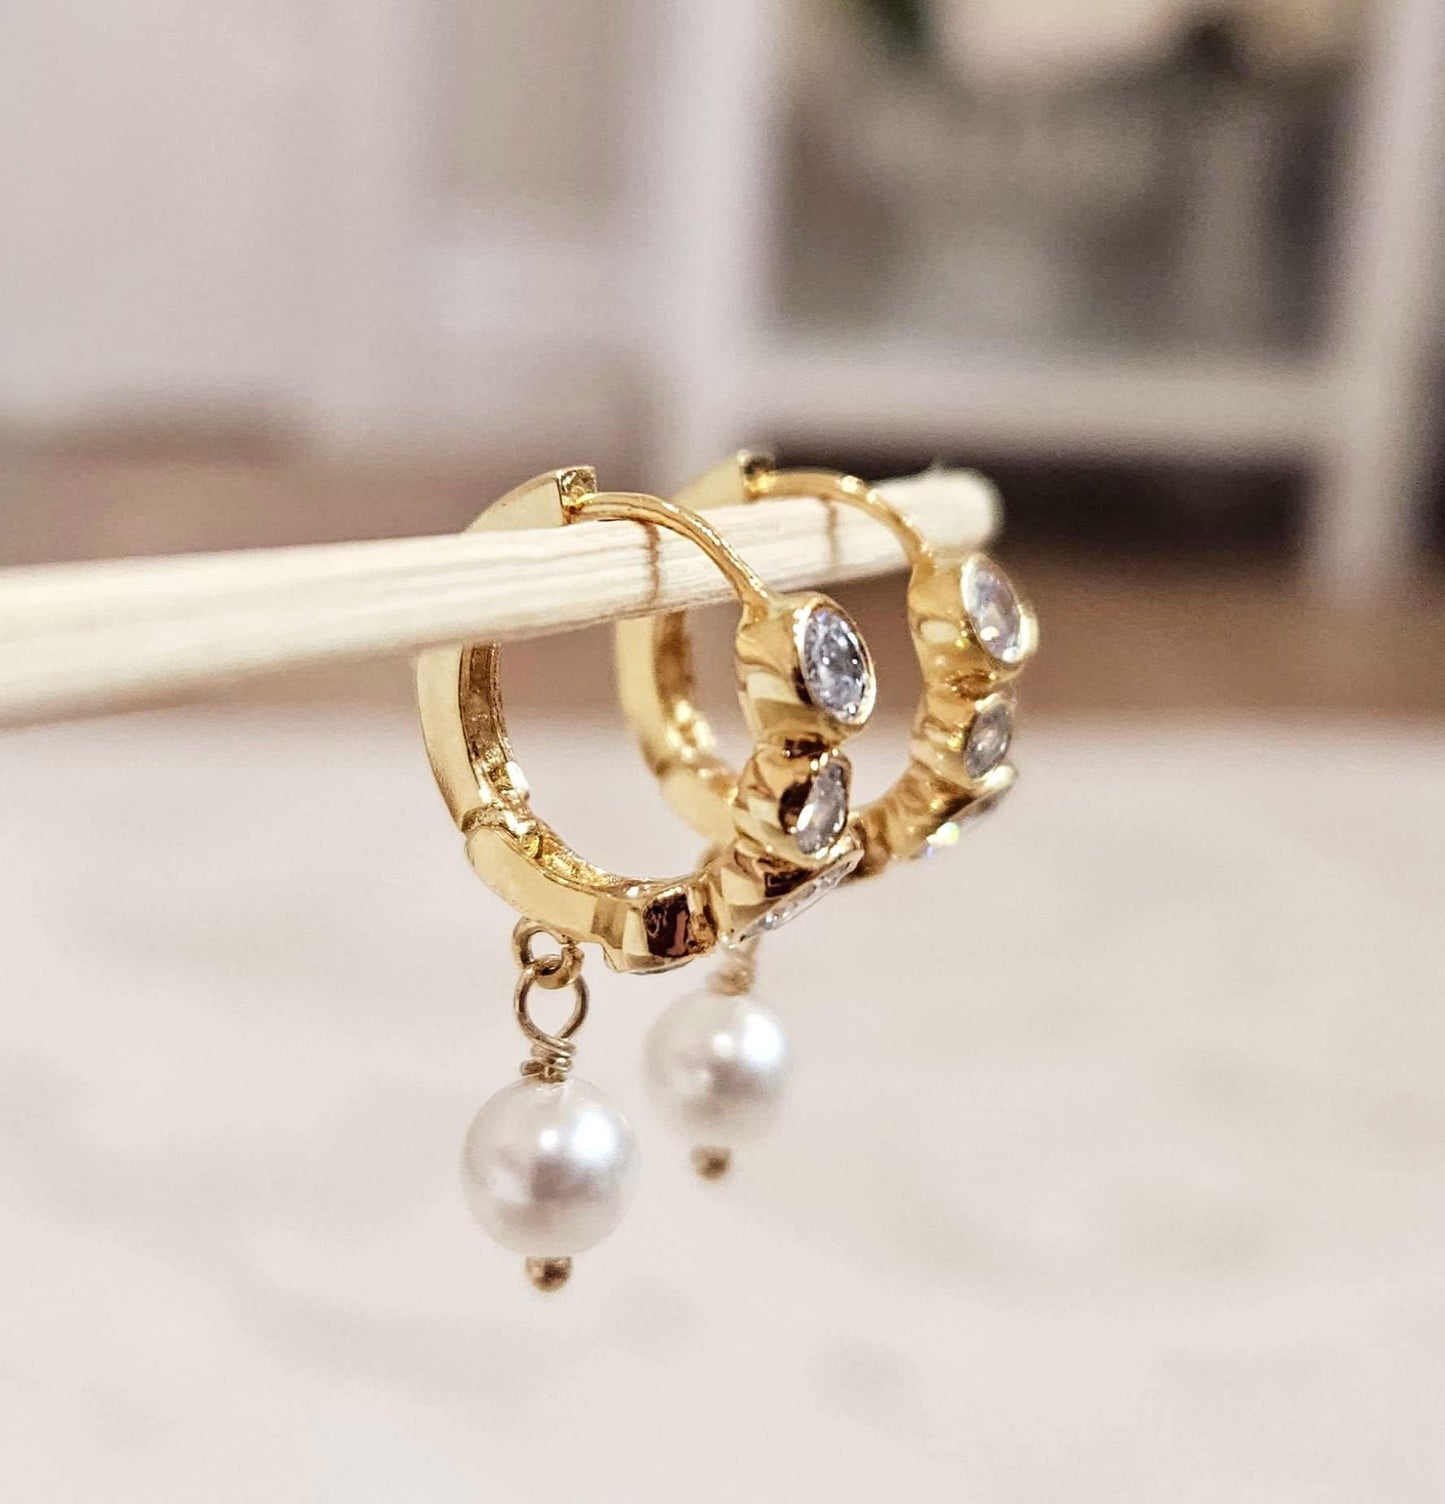 Gold Huggie Hoop Earrings, Everyday Pearl Miniamilist Jewelry, Gift for Her